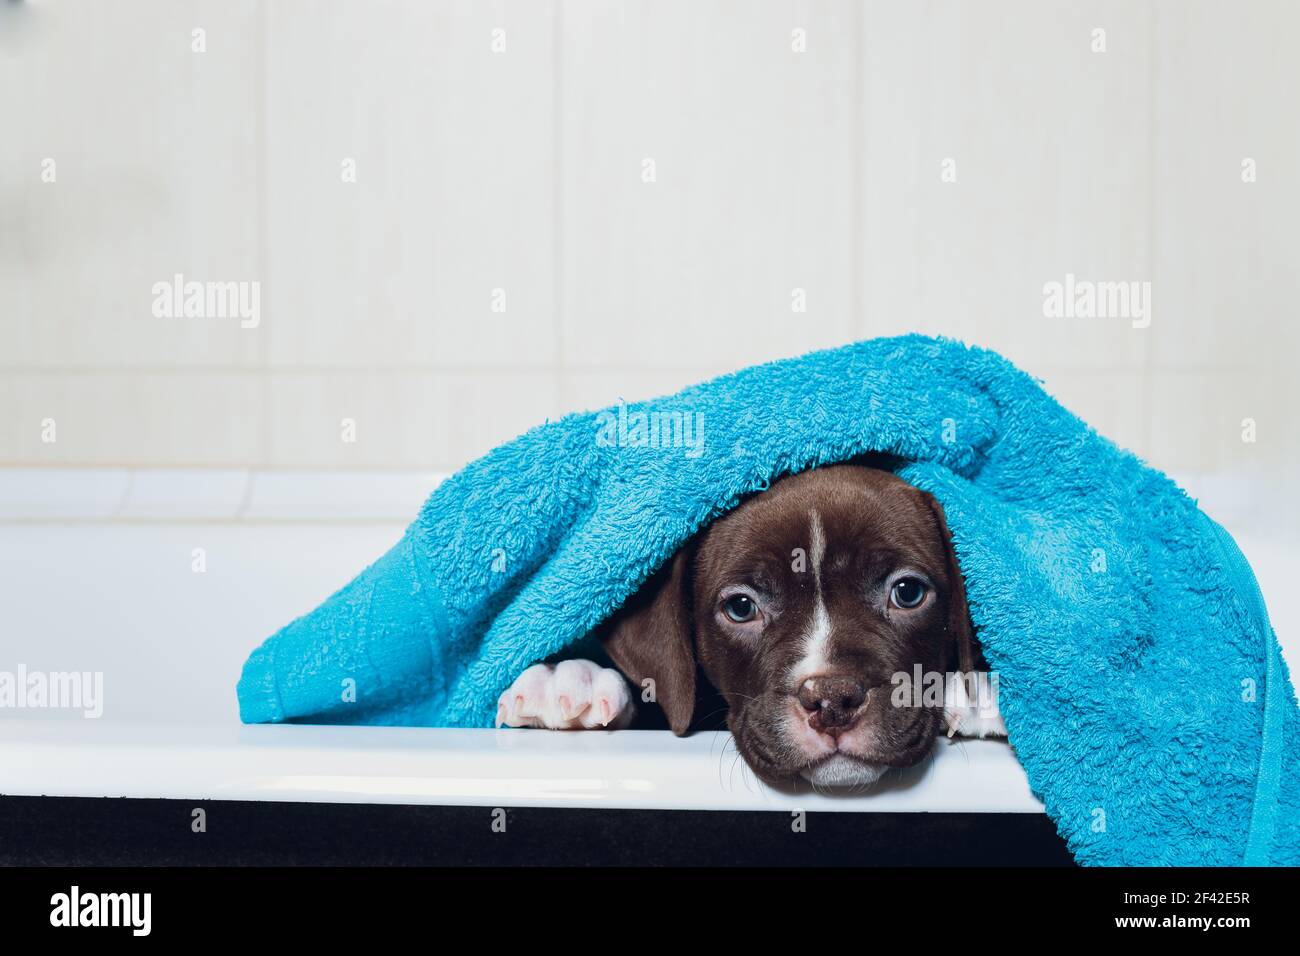 American Bully bathing, Pitbull, dog cleaning, dog wet a bath turquoise towel Stock Photo